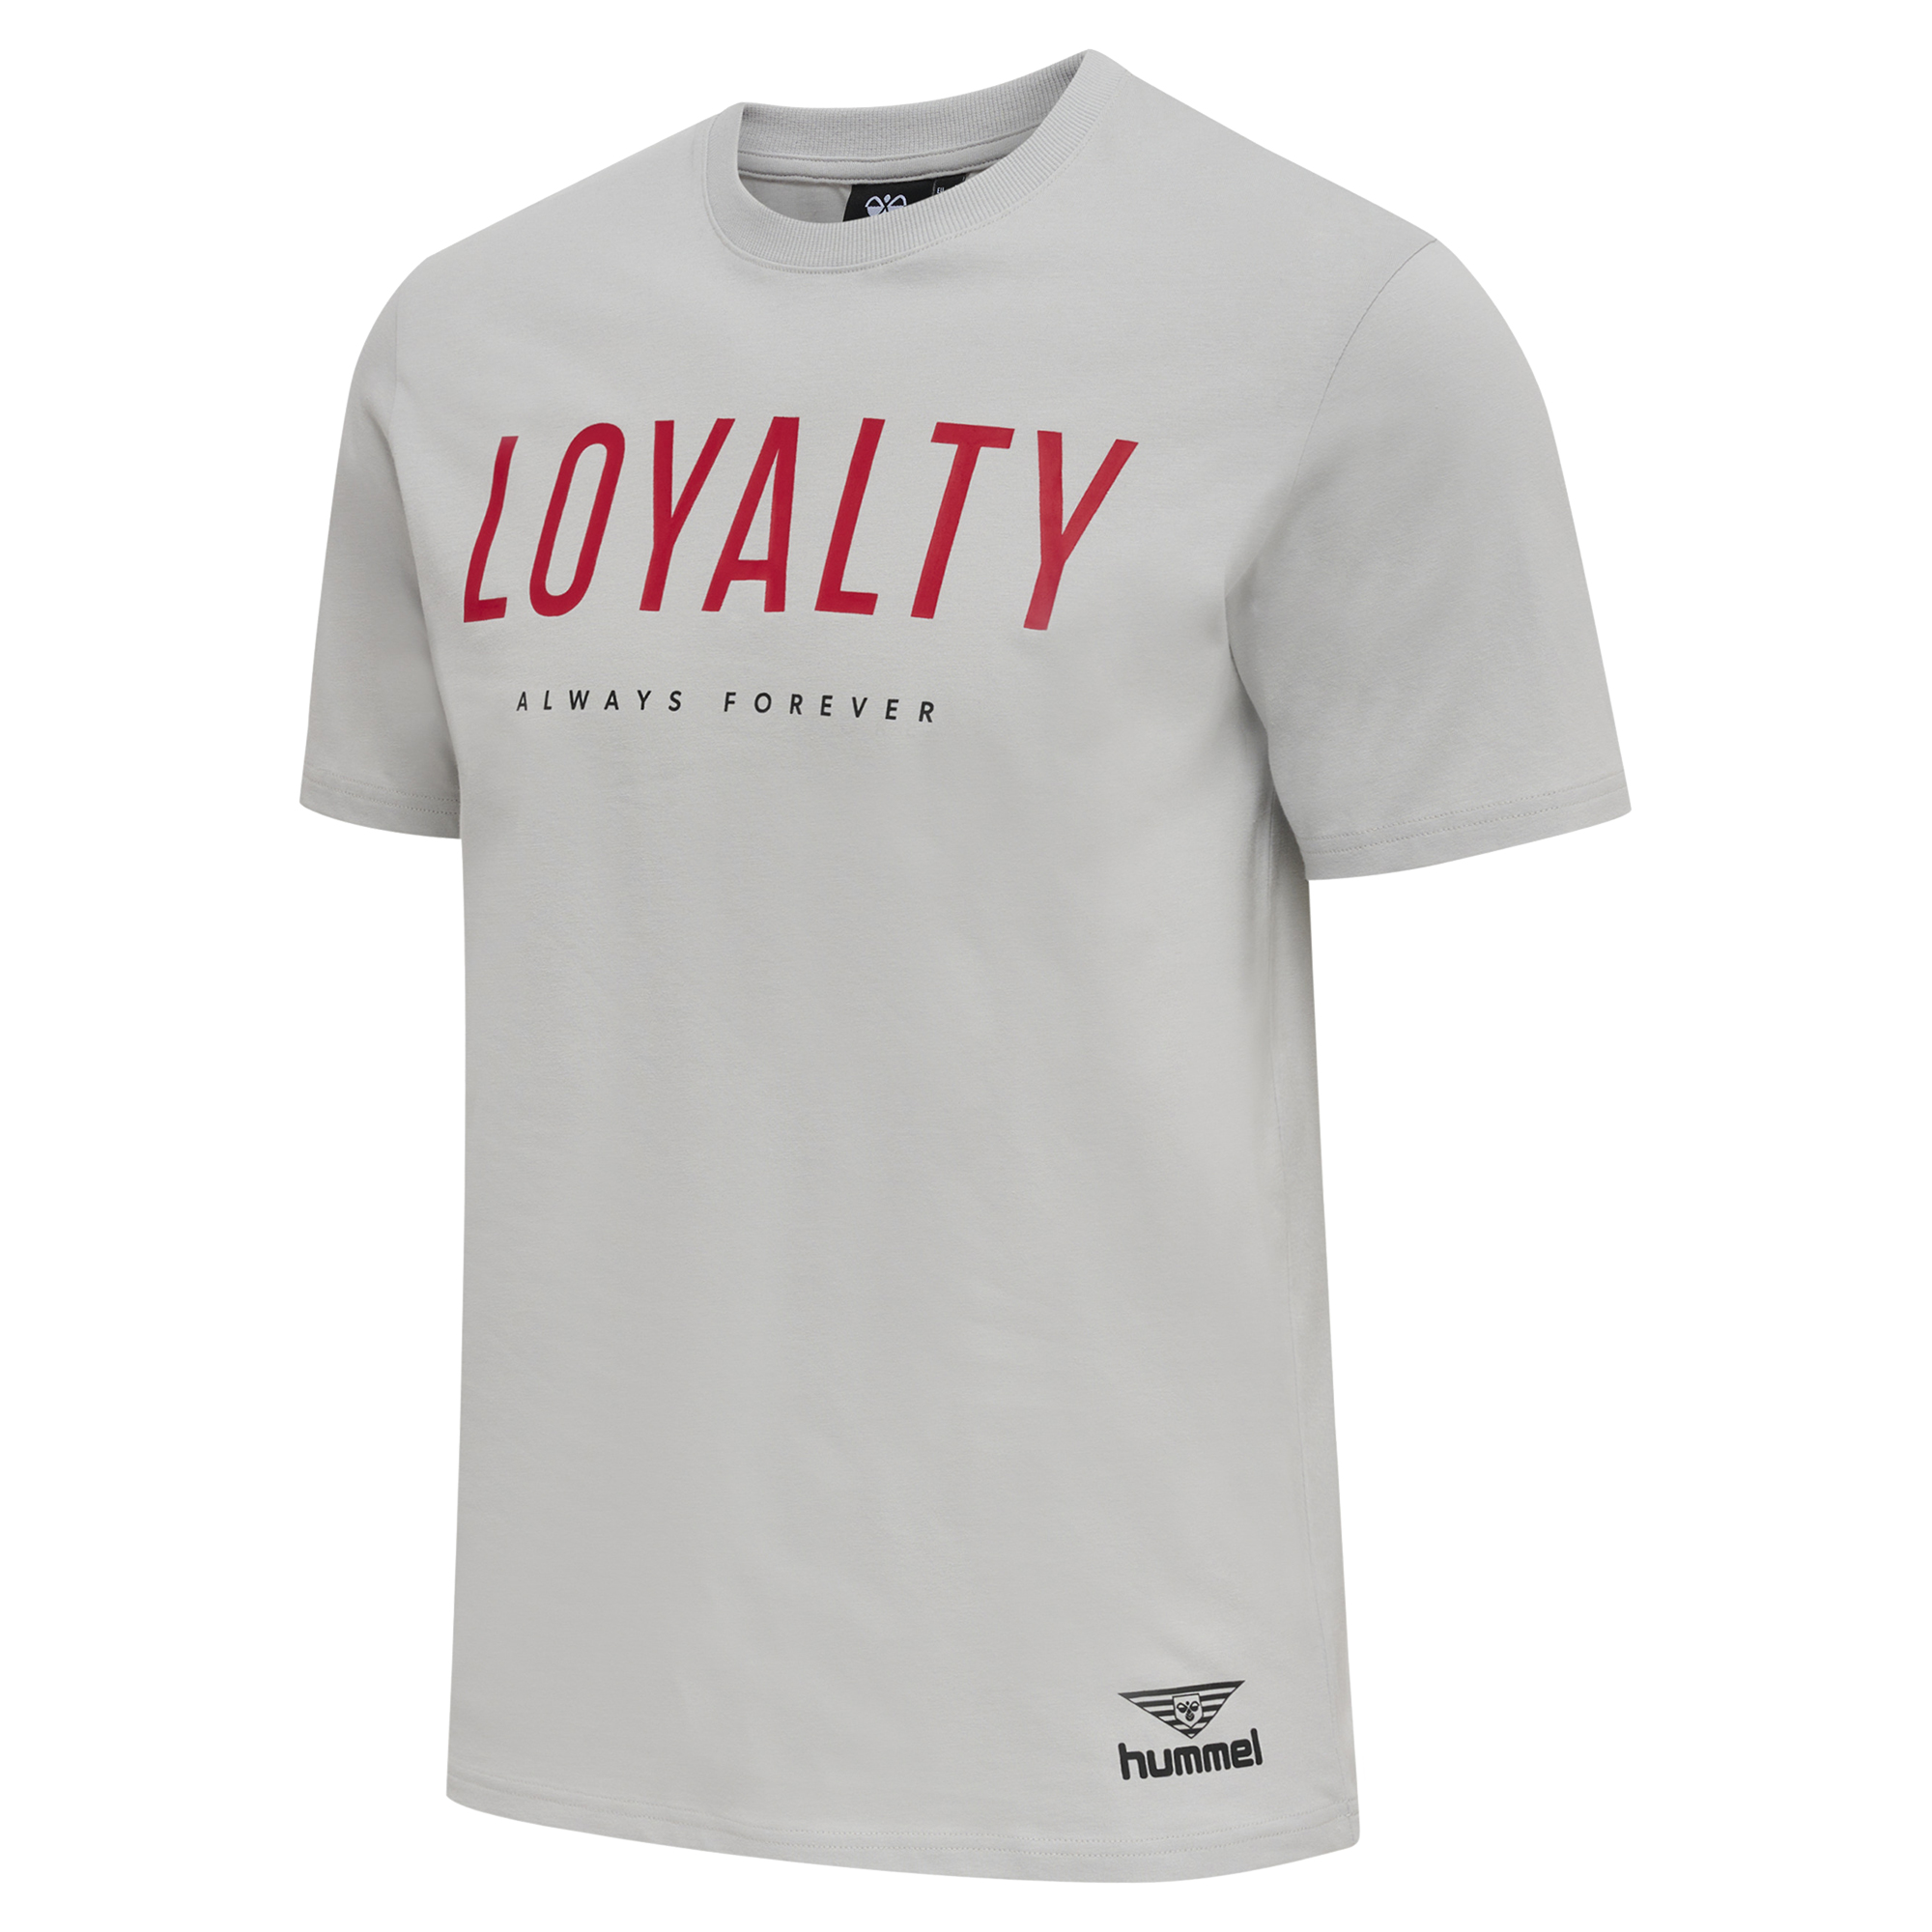 Hummel Lgc Loyalty T-Shirt